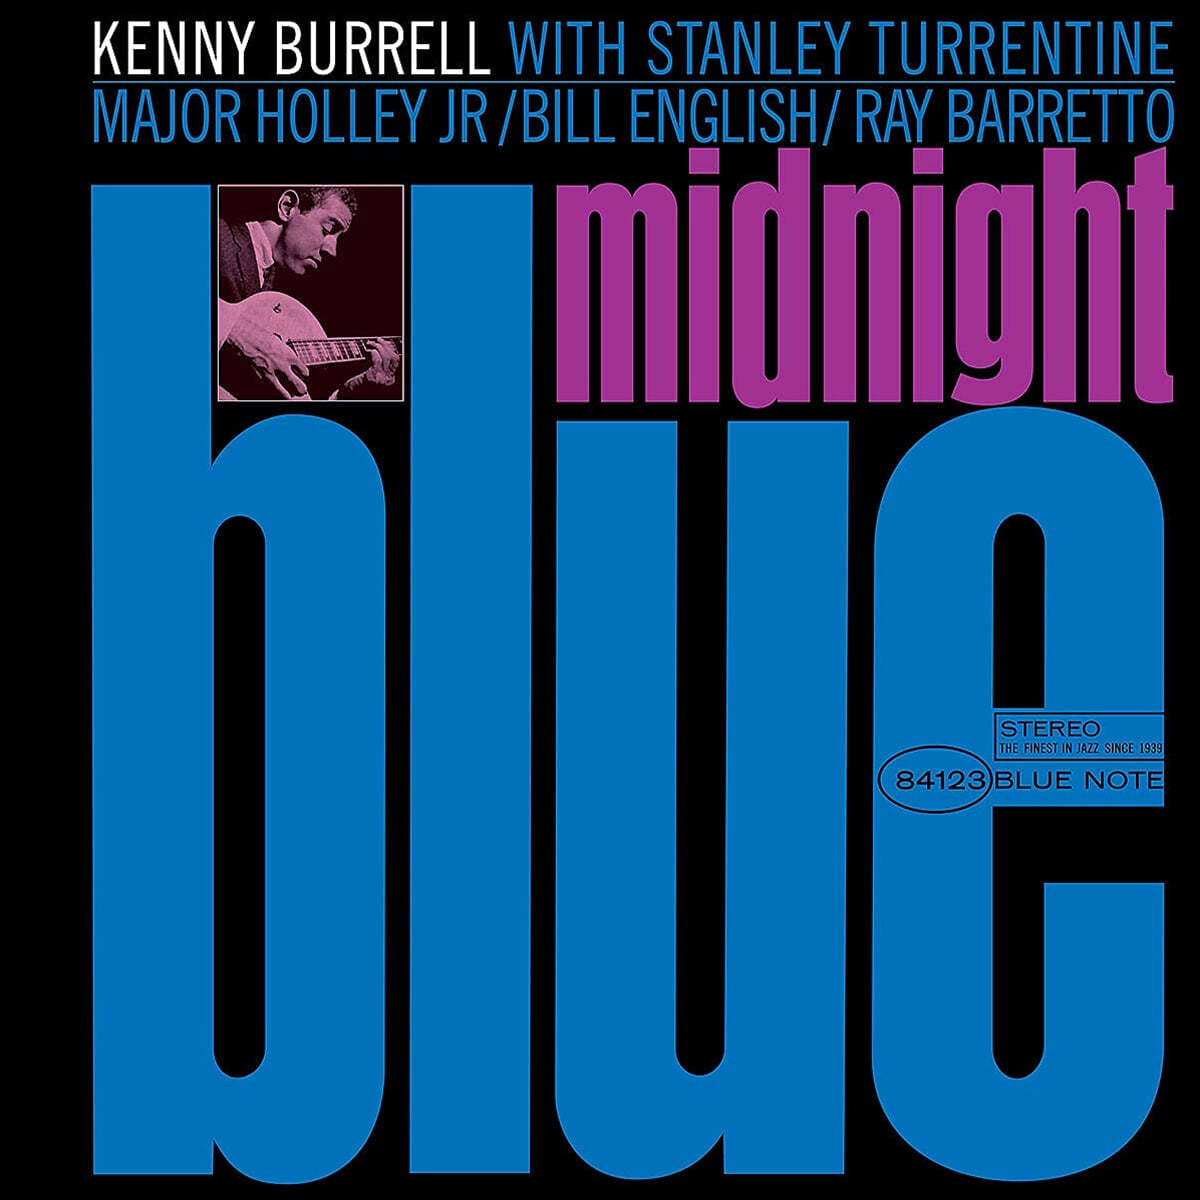 Kenny Burrell (케니 버렐) - Midnight Blue [LP] 